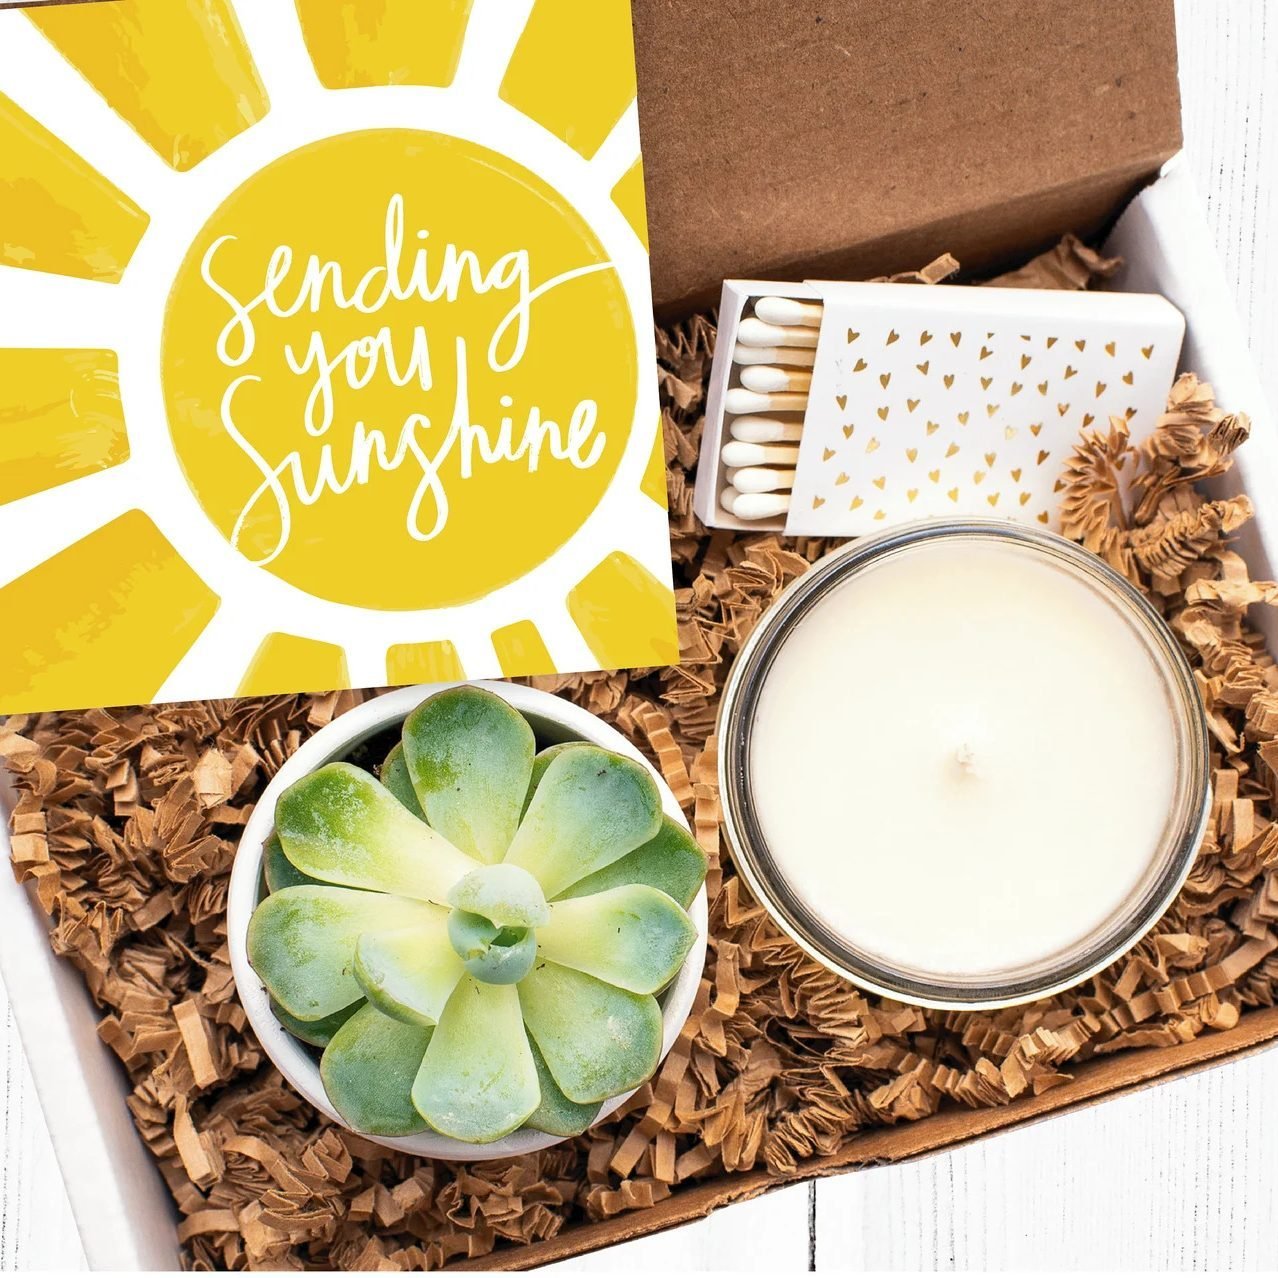 Sending You Sunshine Gift Box Ecomm Via Etsy.com